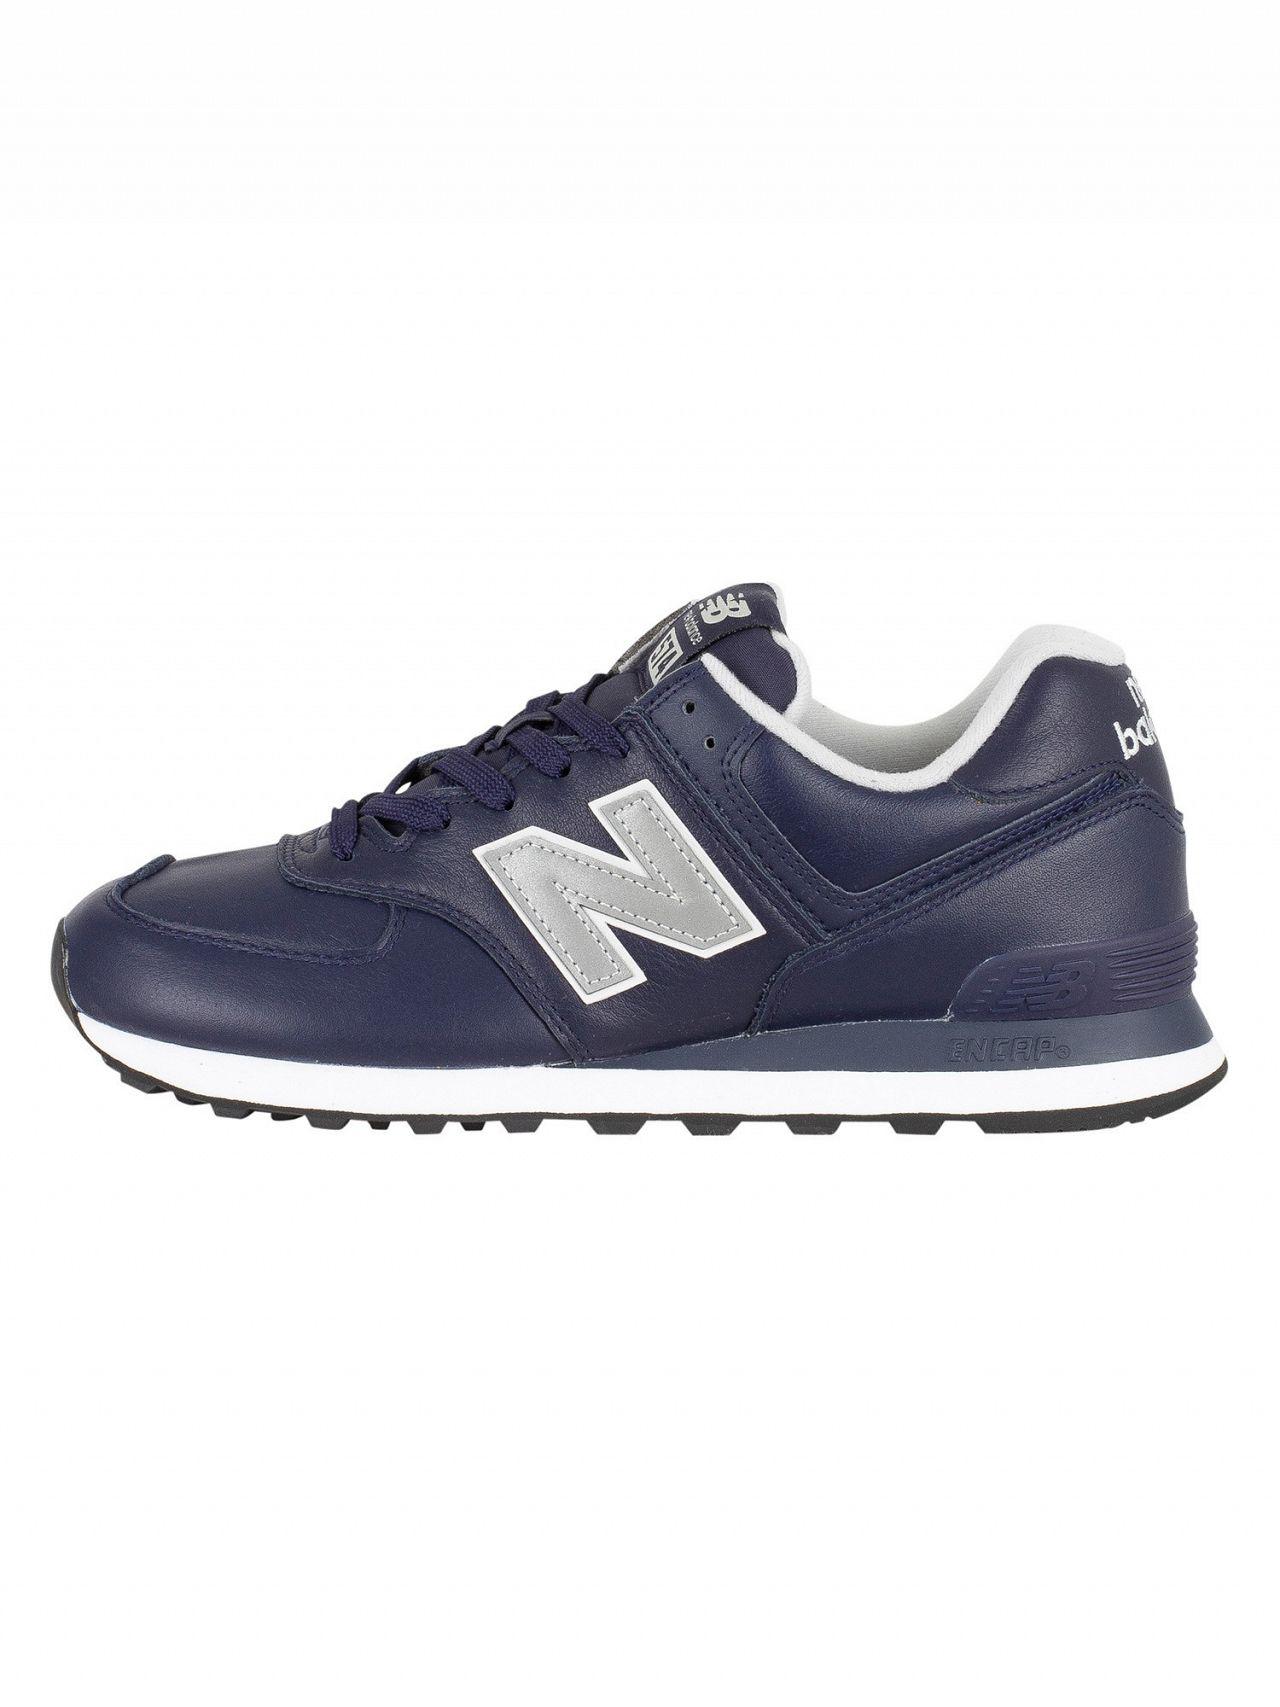 new balance 574 navy blue leather